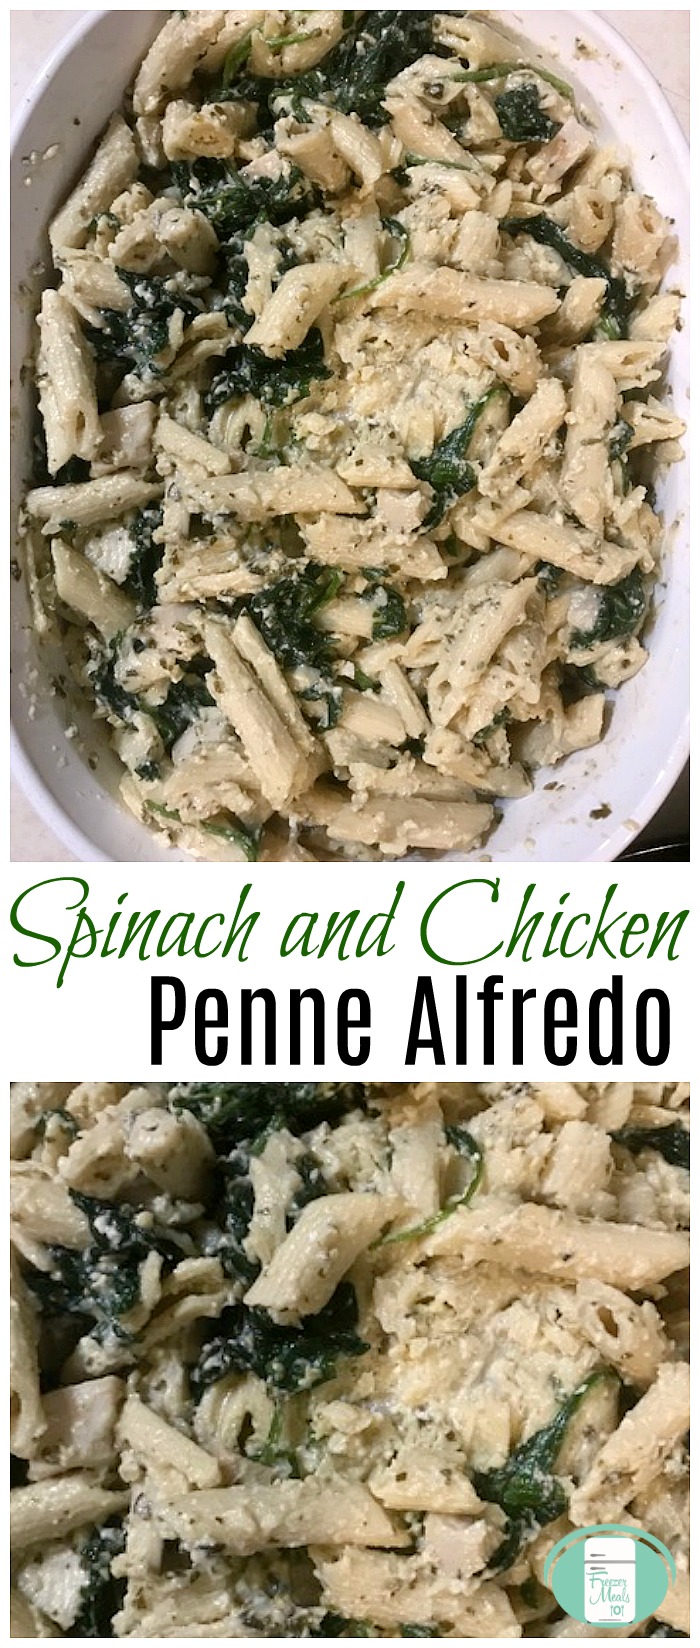 Make Ahead Spinach and Chicken Penne Alfredo #freezermeals101 #freezermeals #pastarecipe #familyfriendlymeals #easyrecipes #makeahead